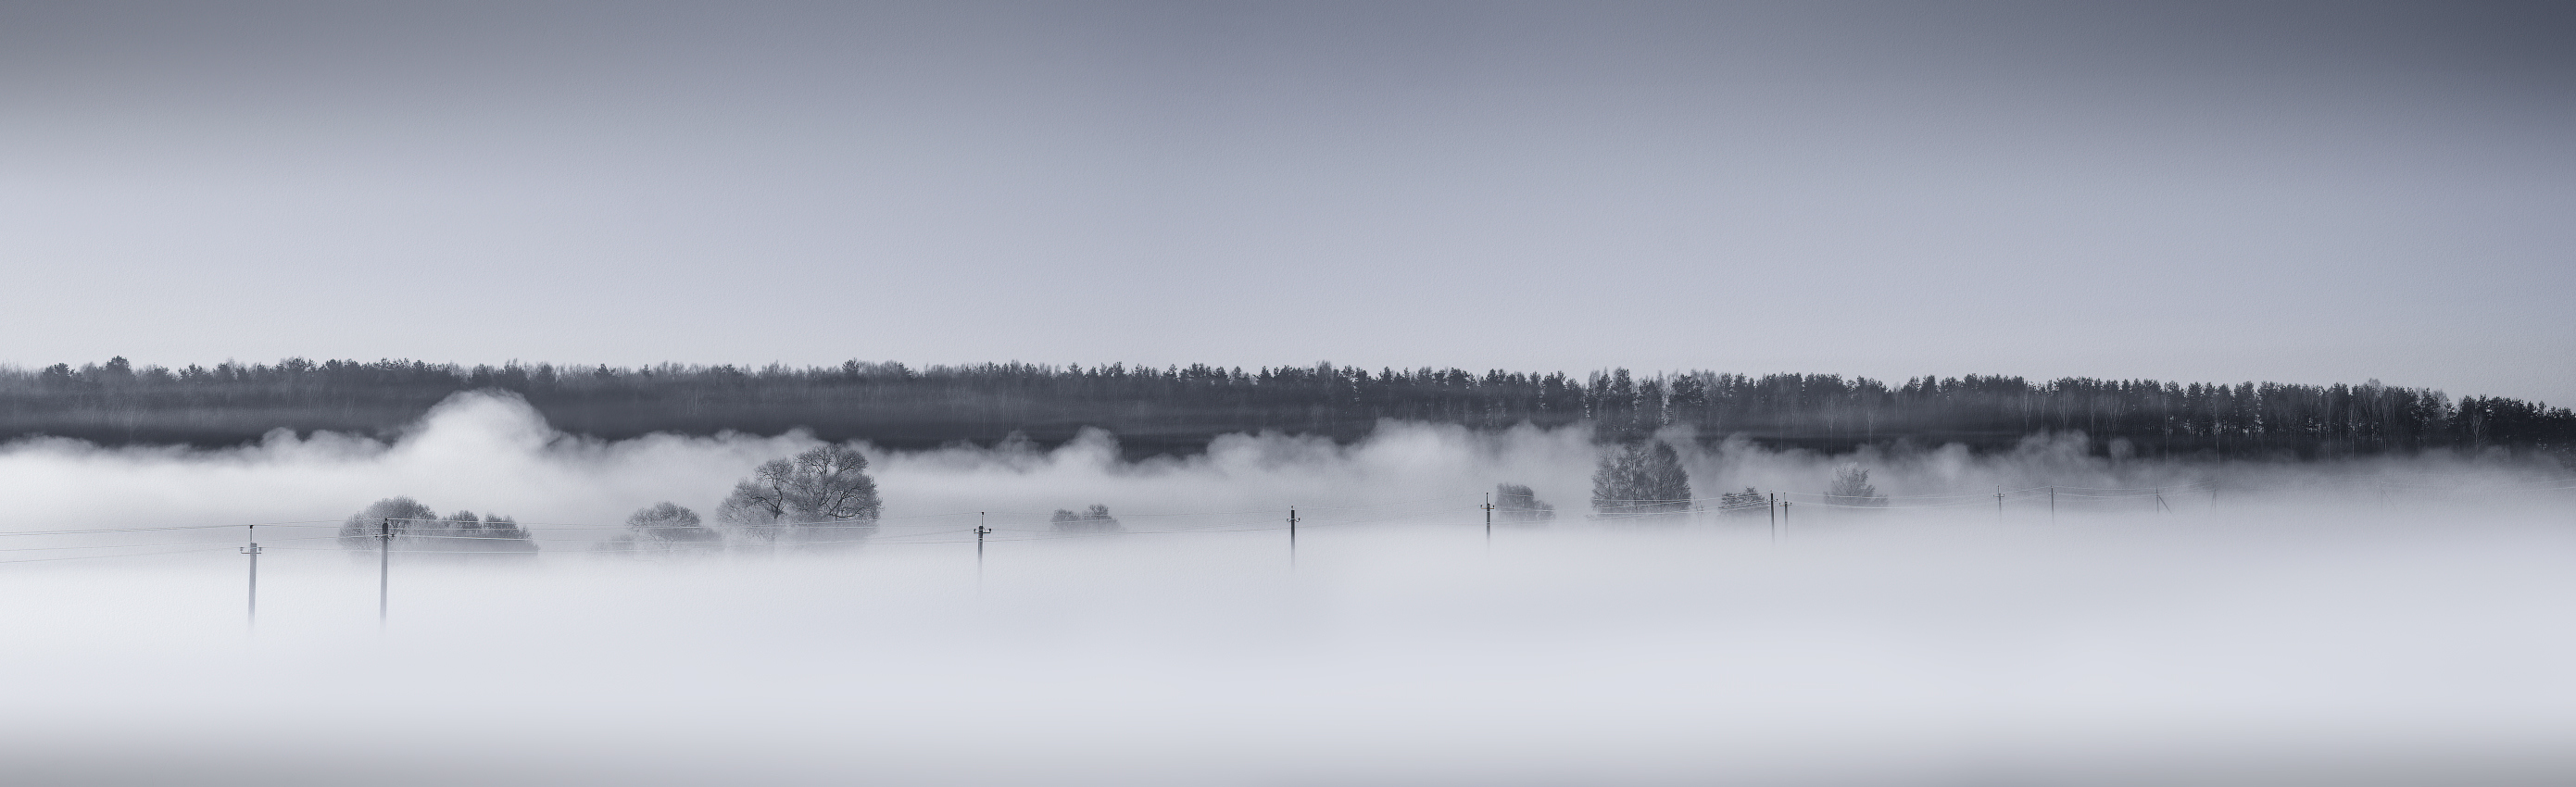 Панорама зимнего тумана | Фотограф Сергей Шабуневич | foto.by фото.бай